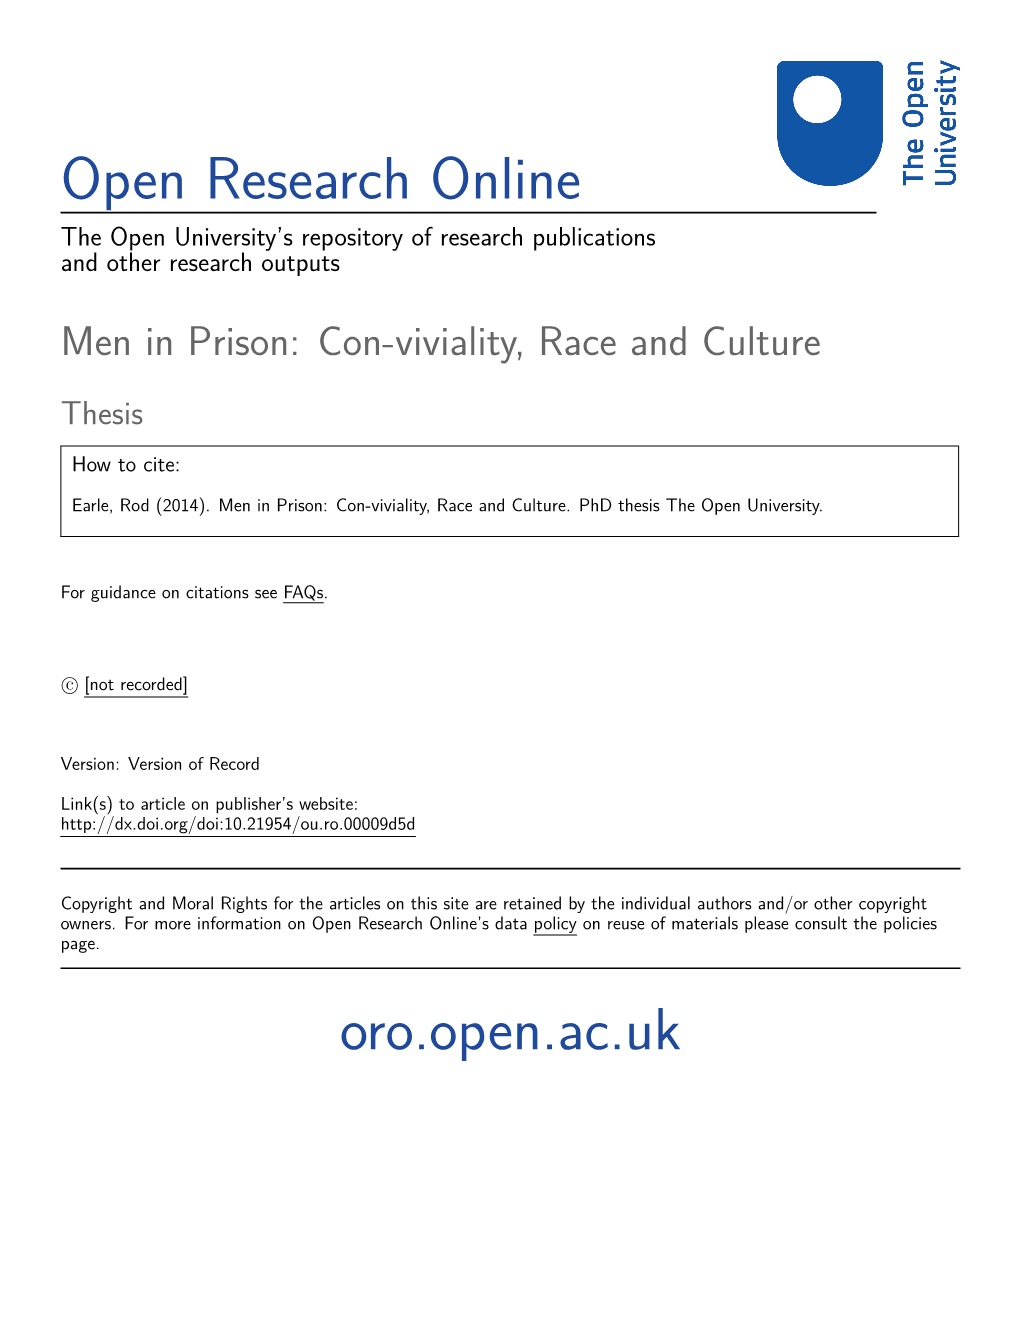 Men in Prison: Con-Viviality, Race and Culture